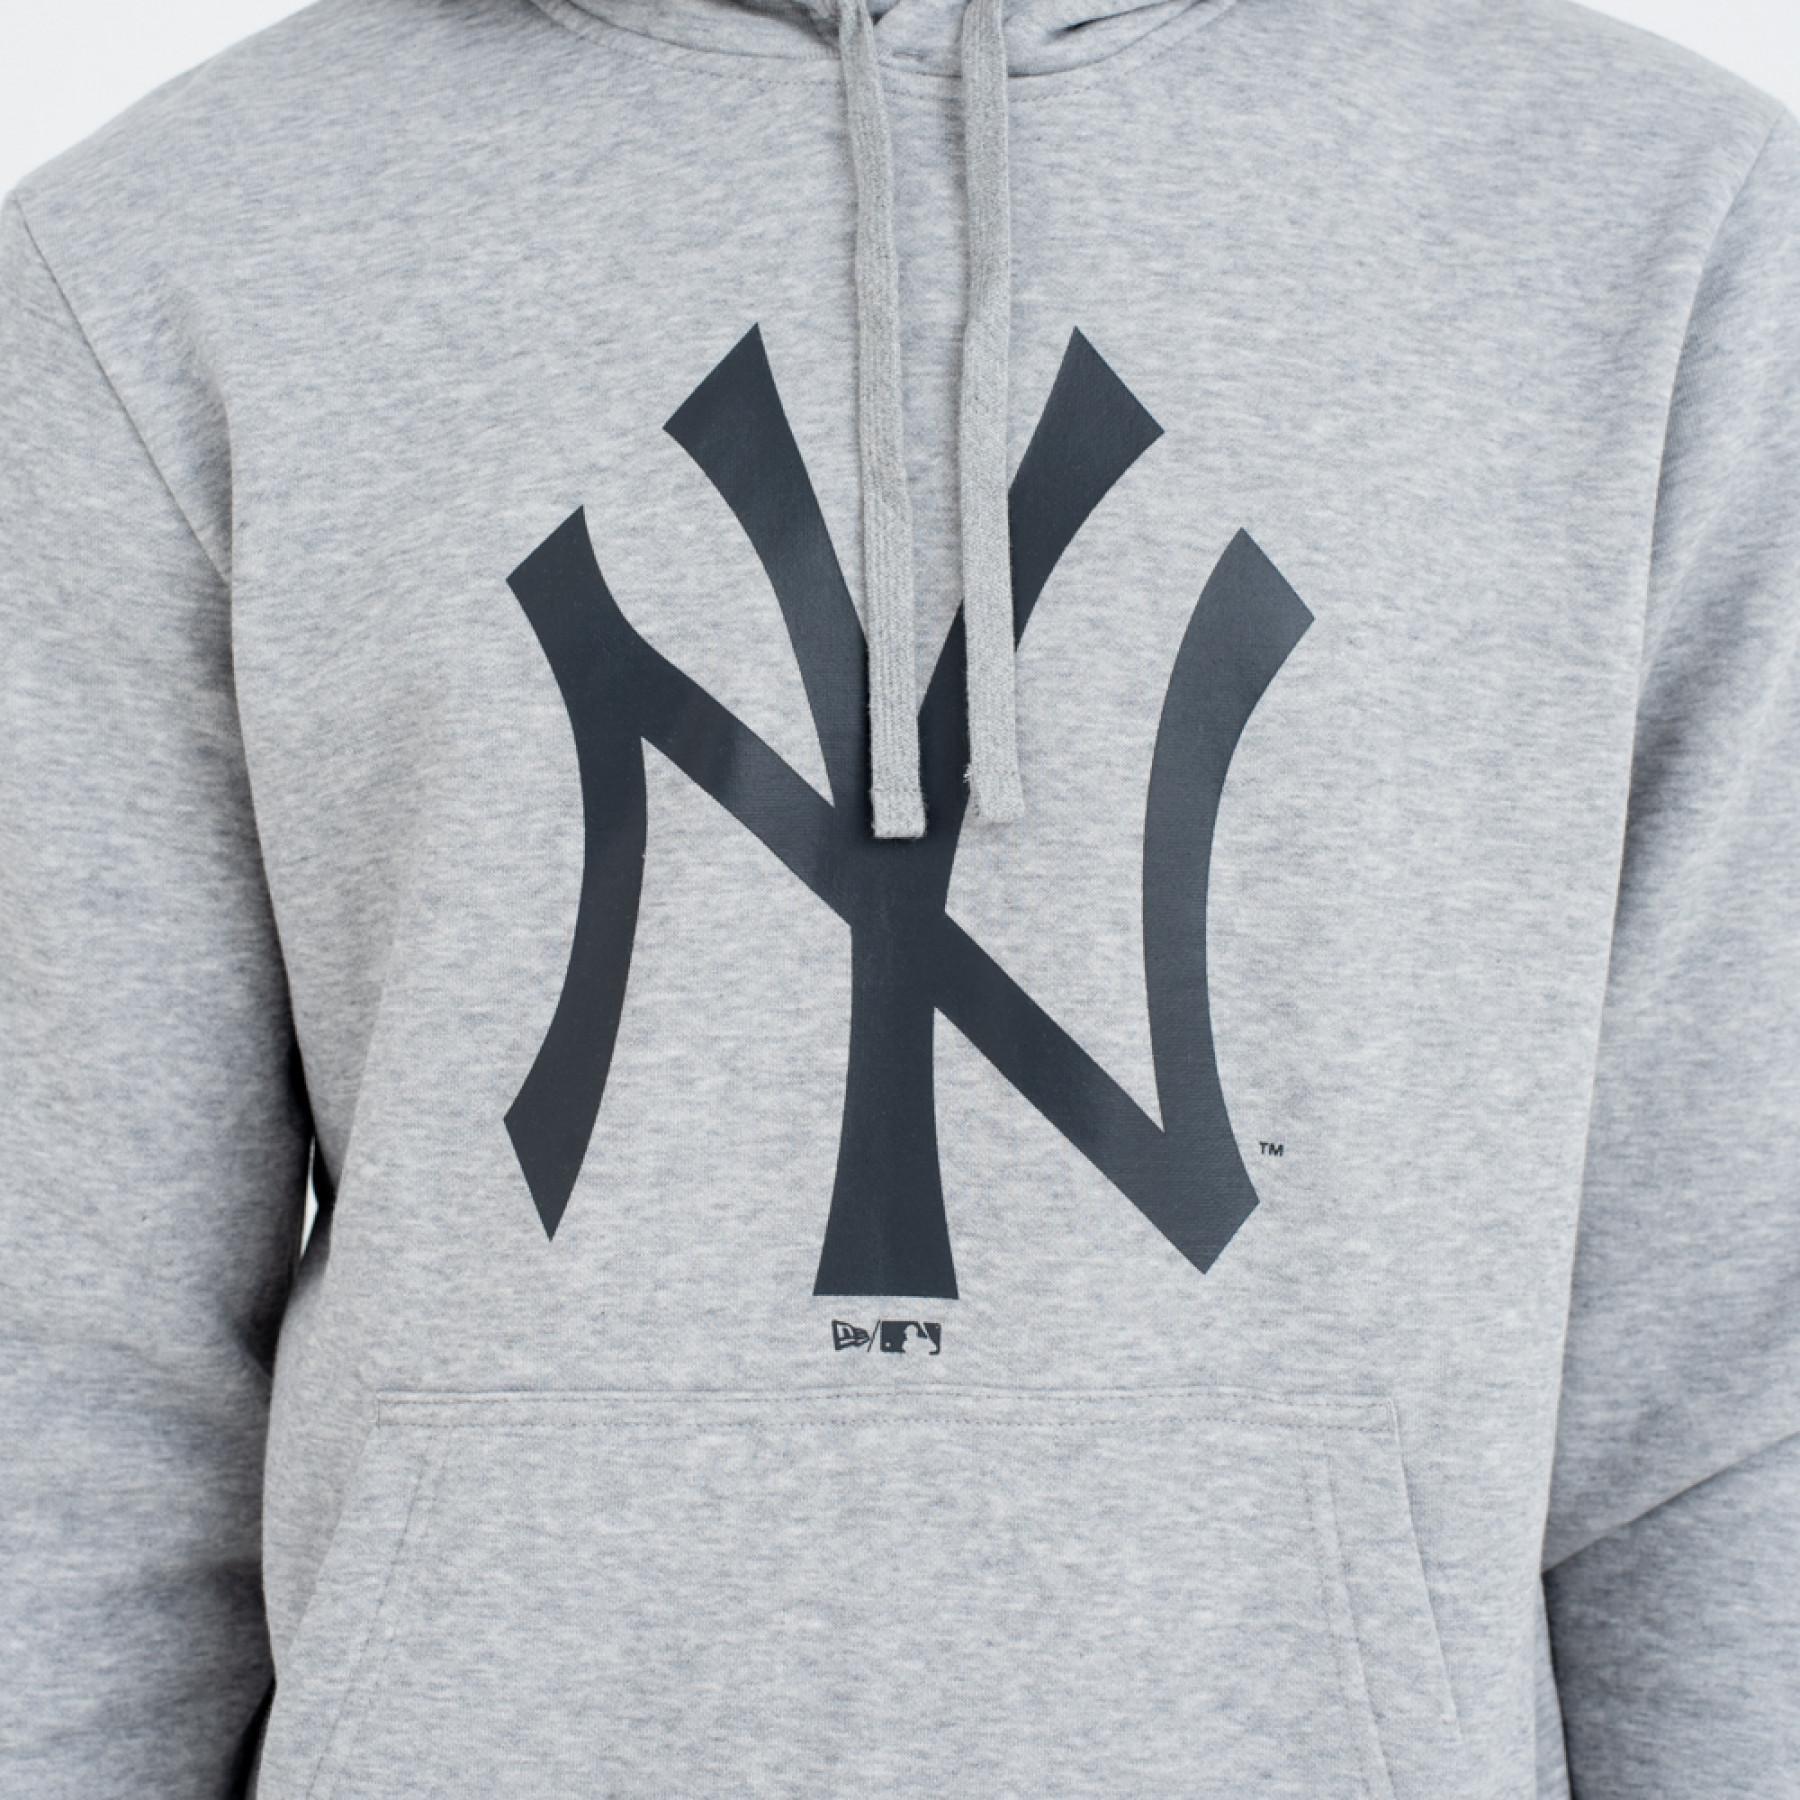 Sweat à capuche New Era New York Yankees logo